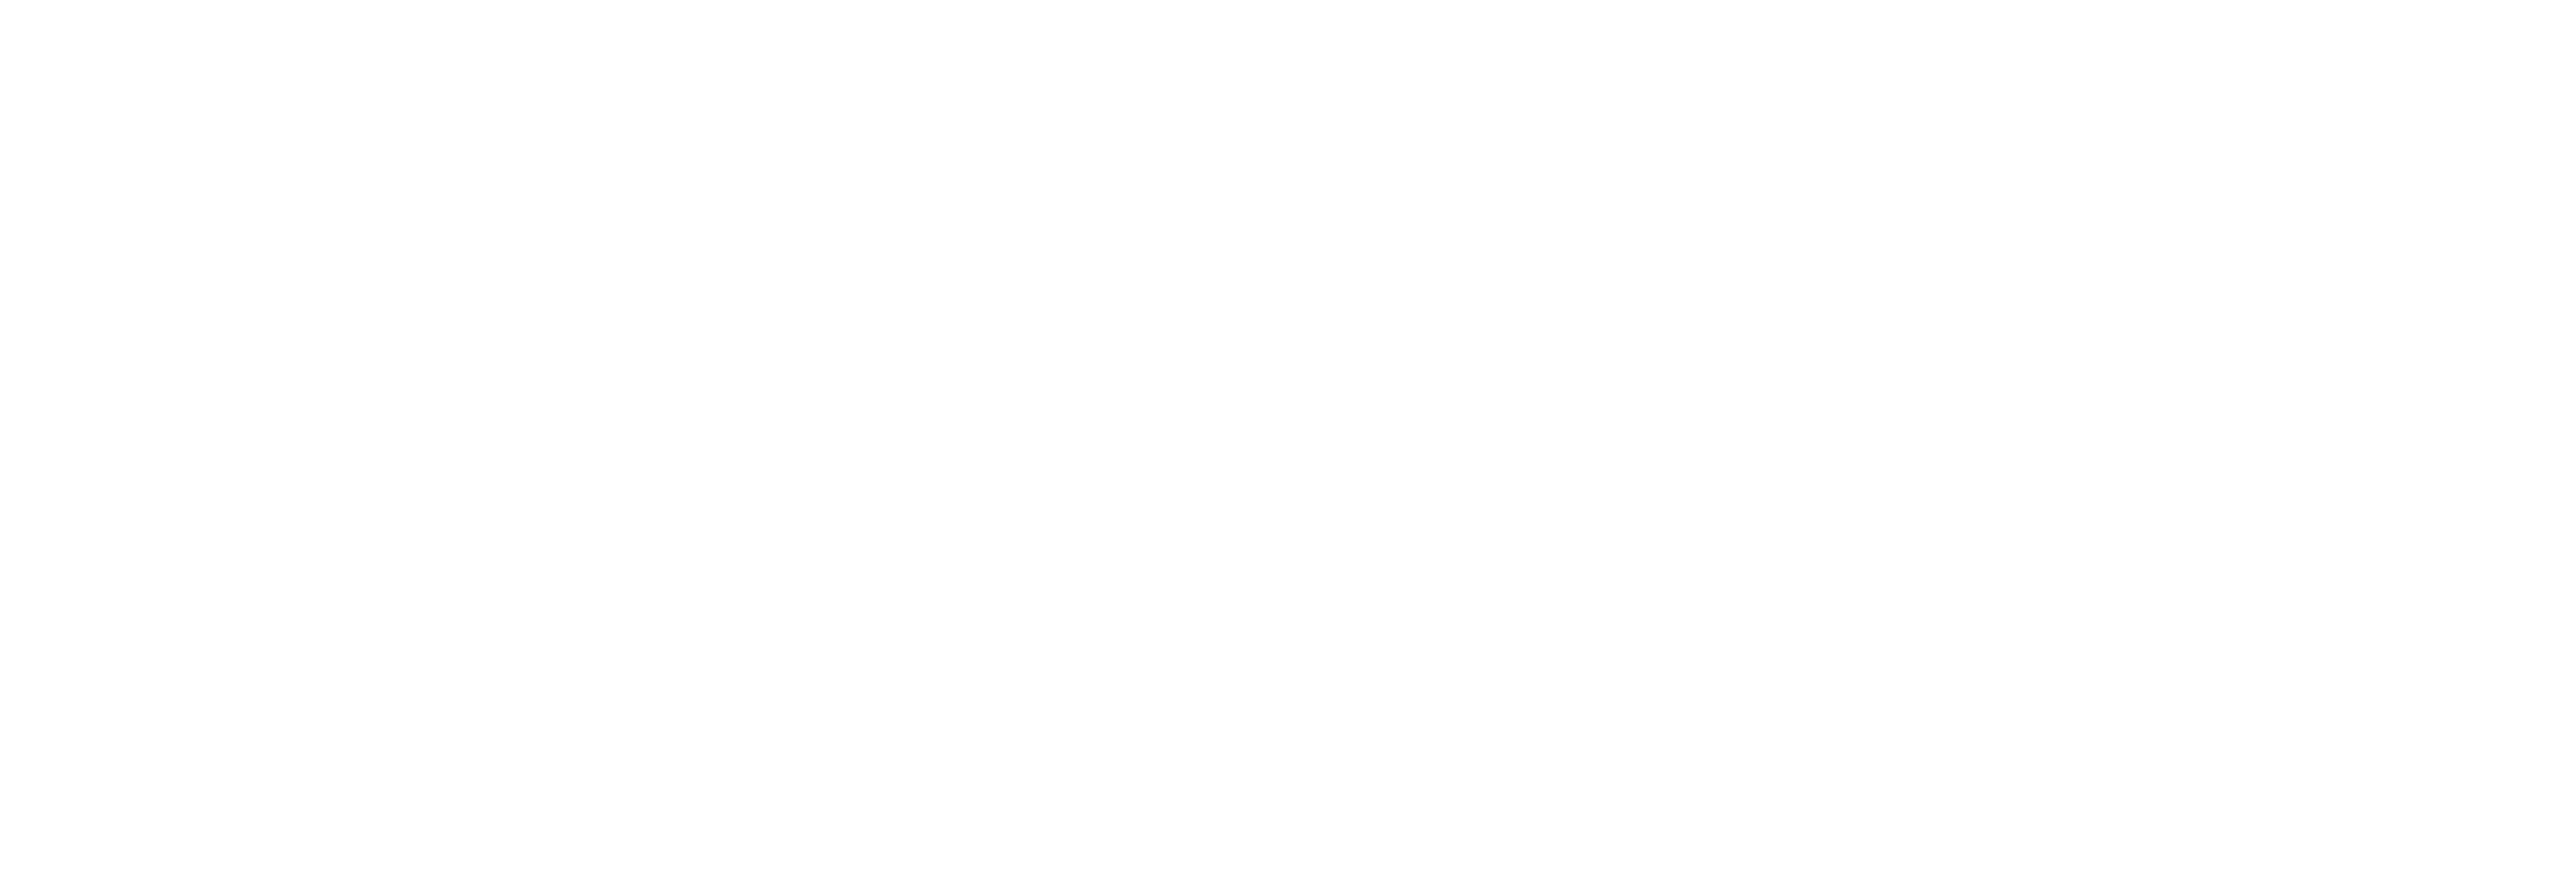 AniCura Dierenkliniek Bossenbuurt logo